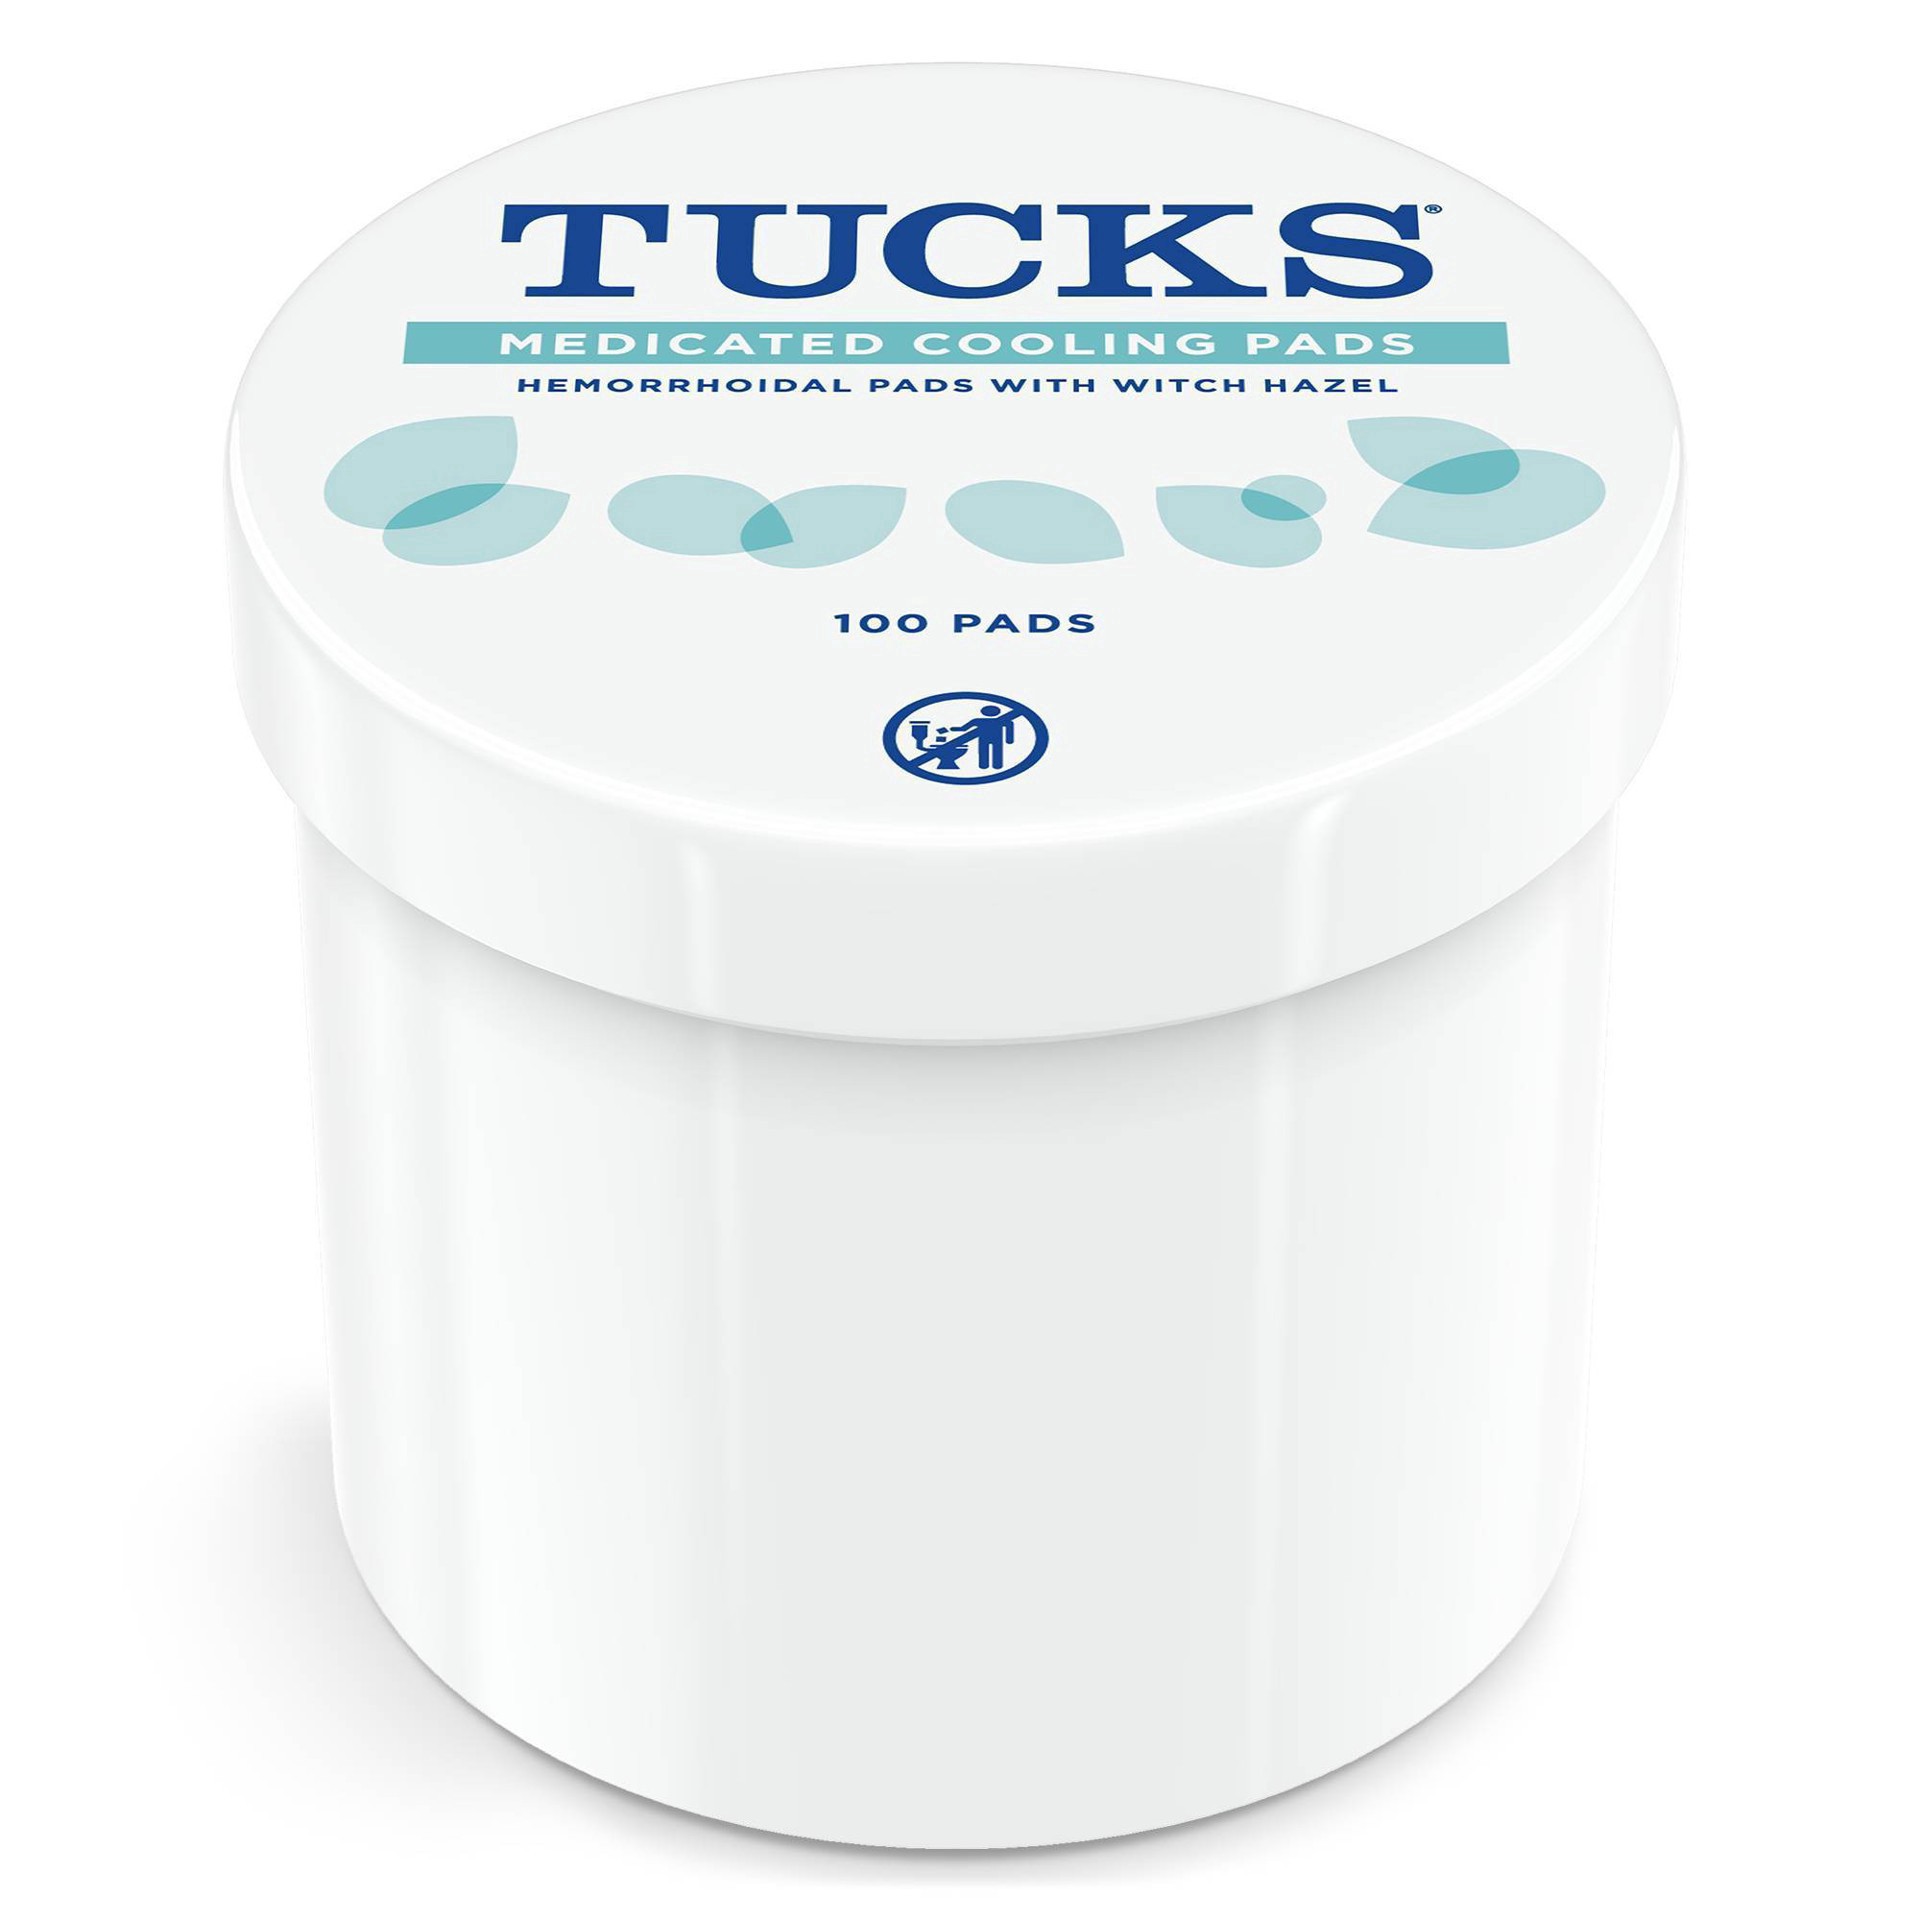 Tucks Medicated Hemorrhoidal Pads - 100ct